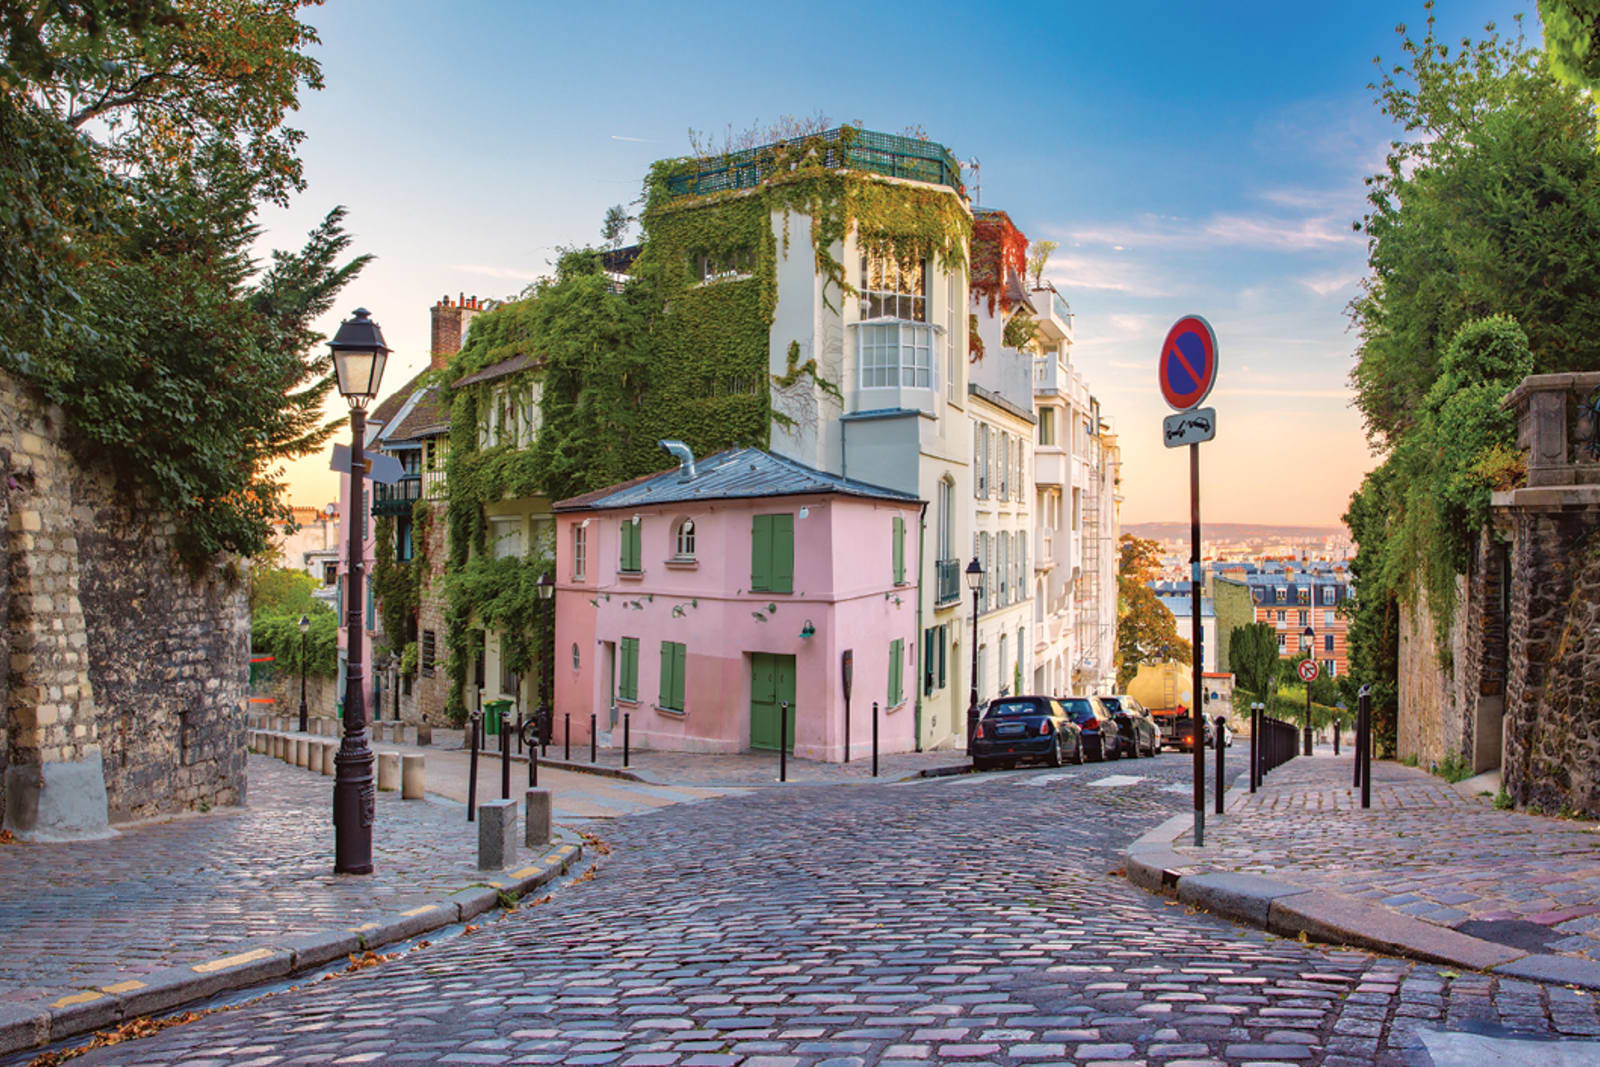 Ivy-clad buildings on a cobblestone street in Montmartre, Paris